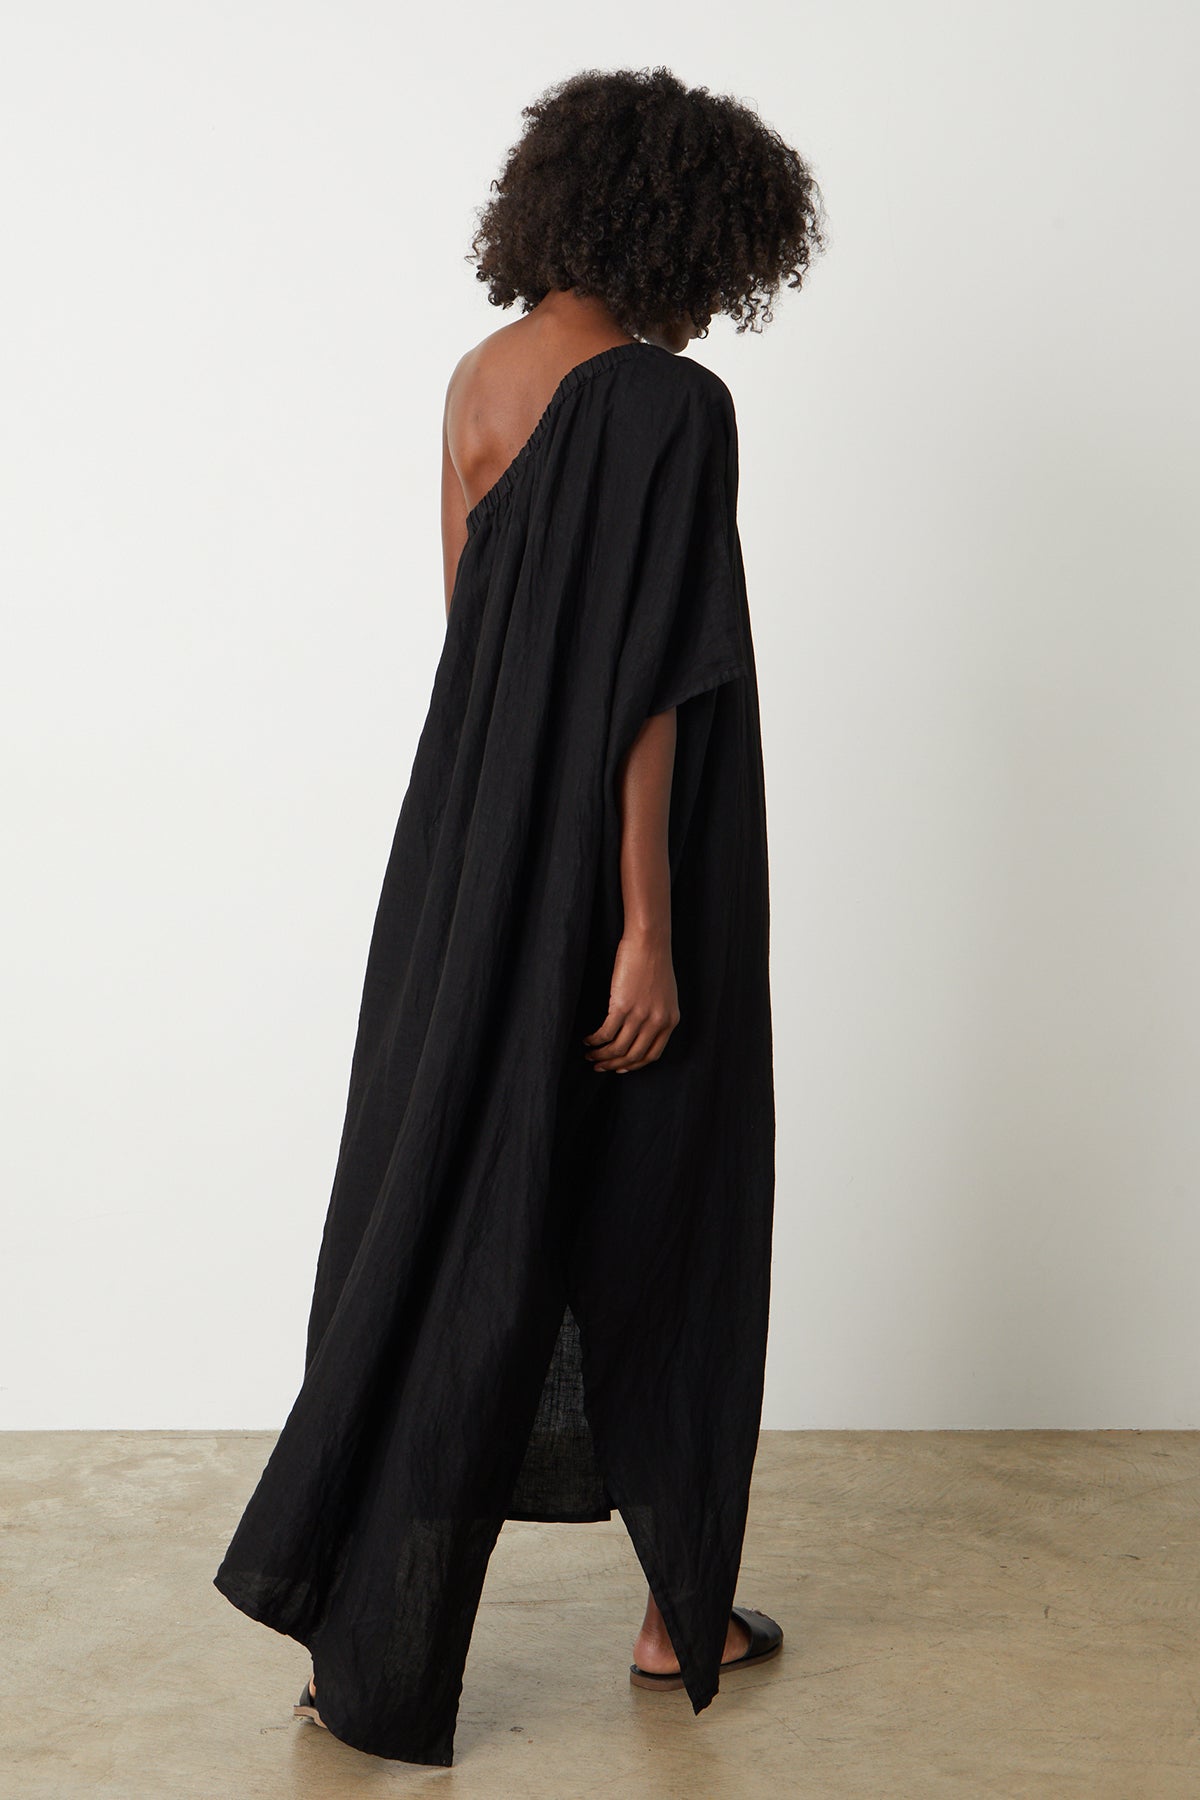 Andrea Linen Dress in black with black slides full length back & side-26305284440257